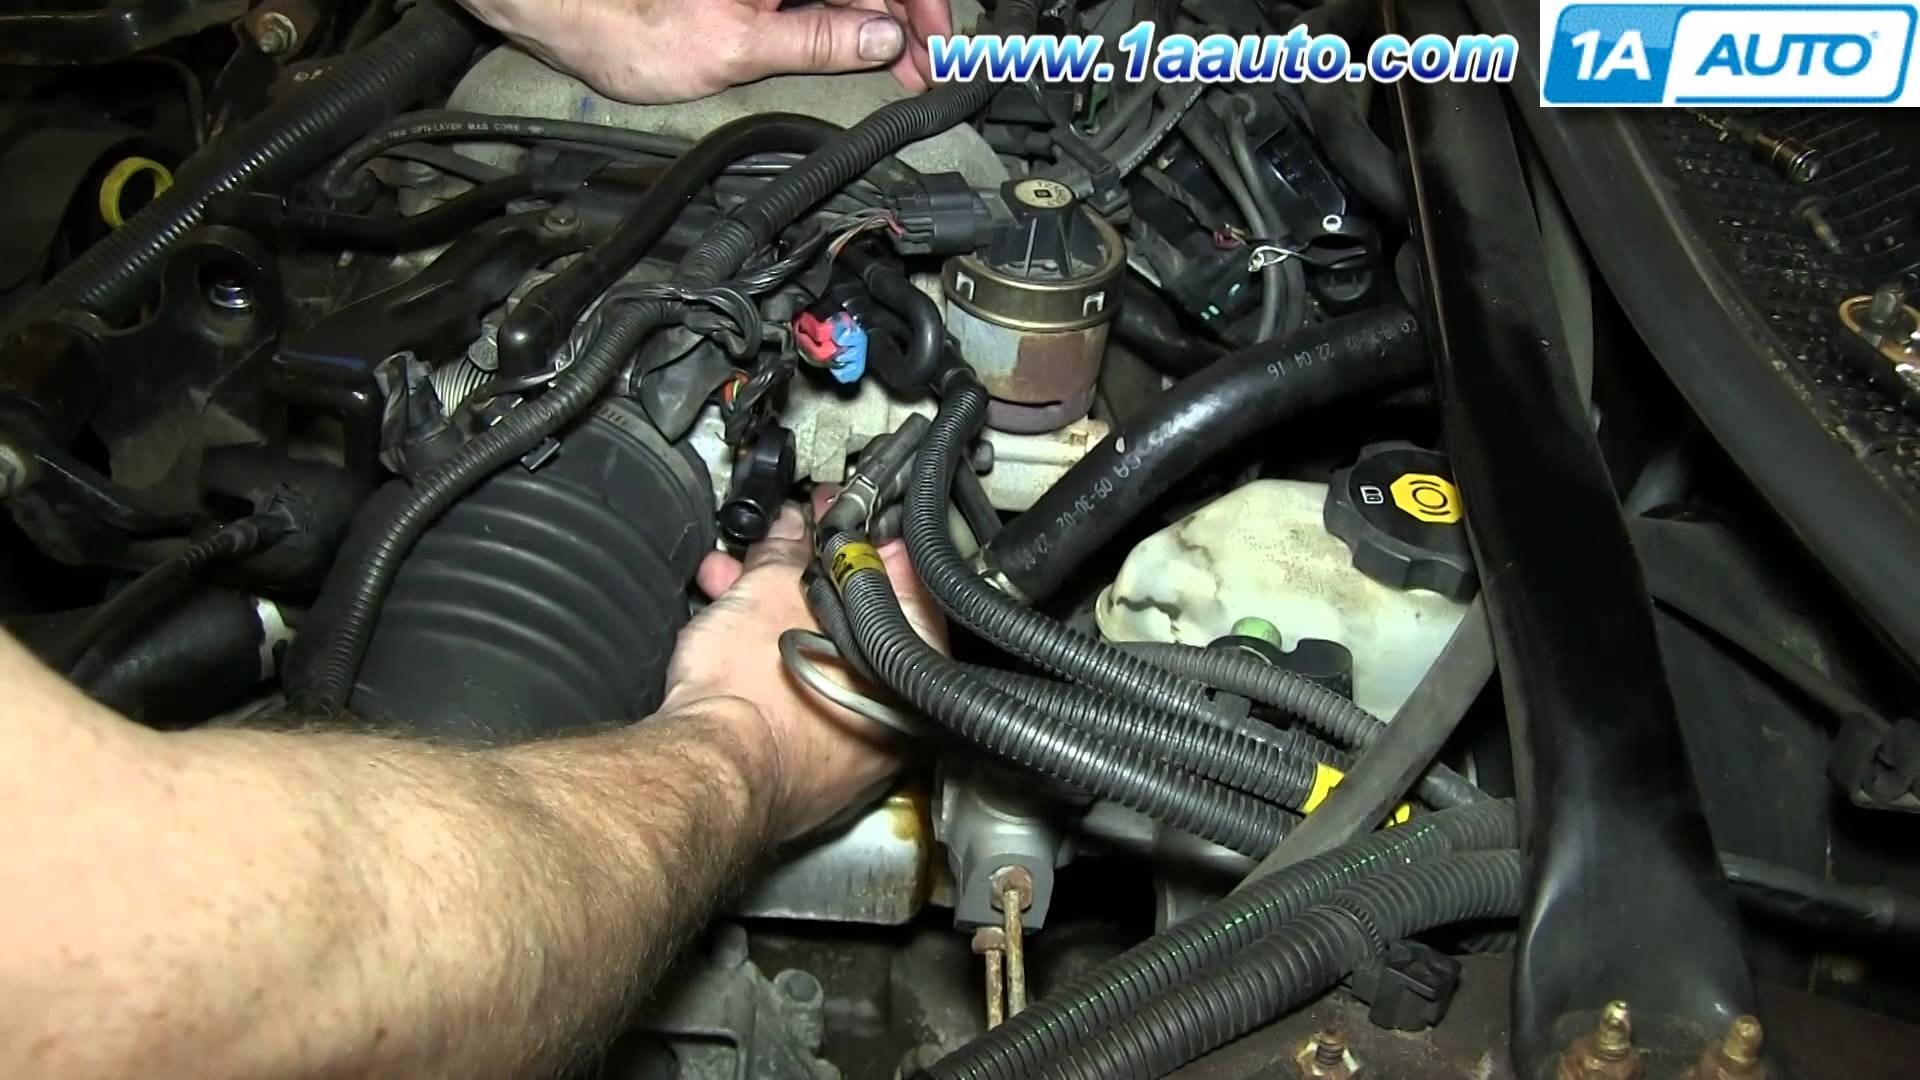 2001 Pontiac Aztek Engine Diagram How to Install Replace Tps Throttle Position Sensor 3 4l Chevy Monte Of 2001 Pontiac Aztek Engine Diagram